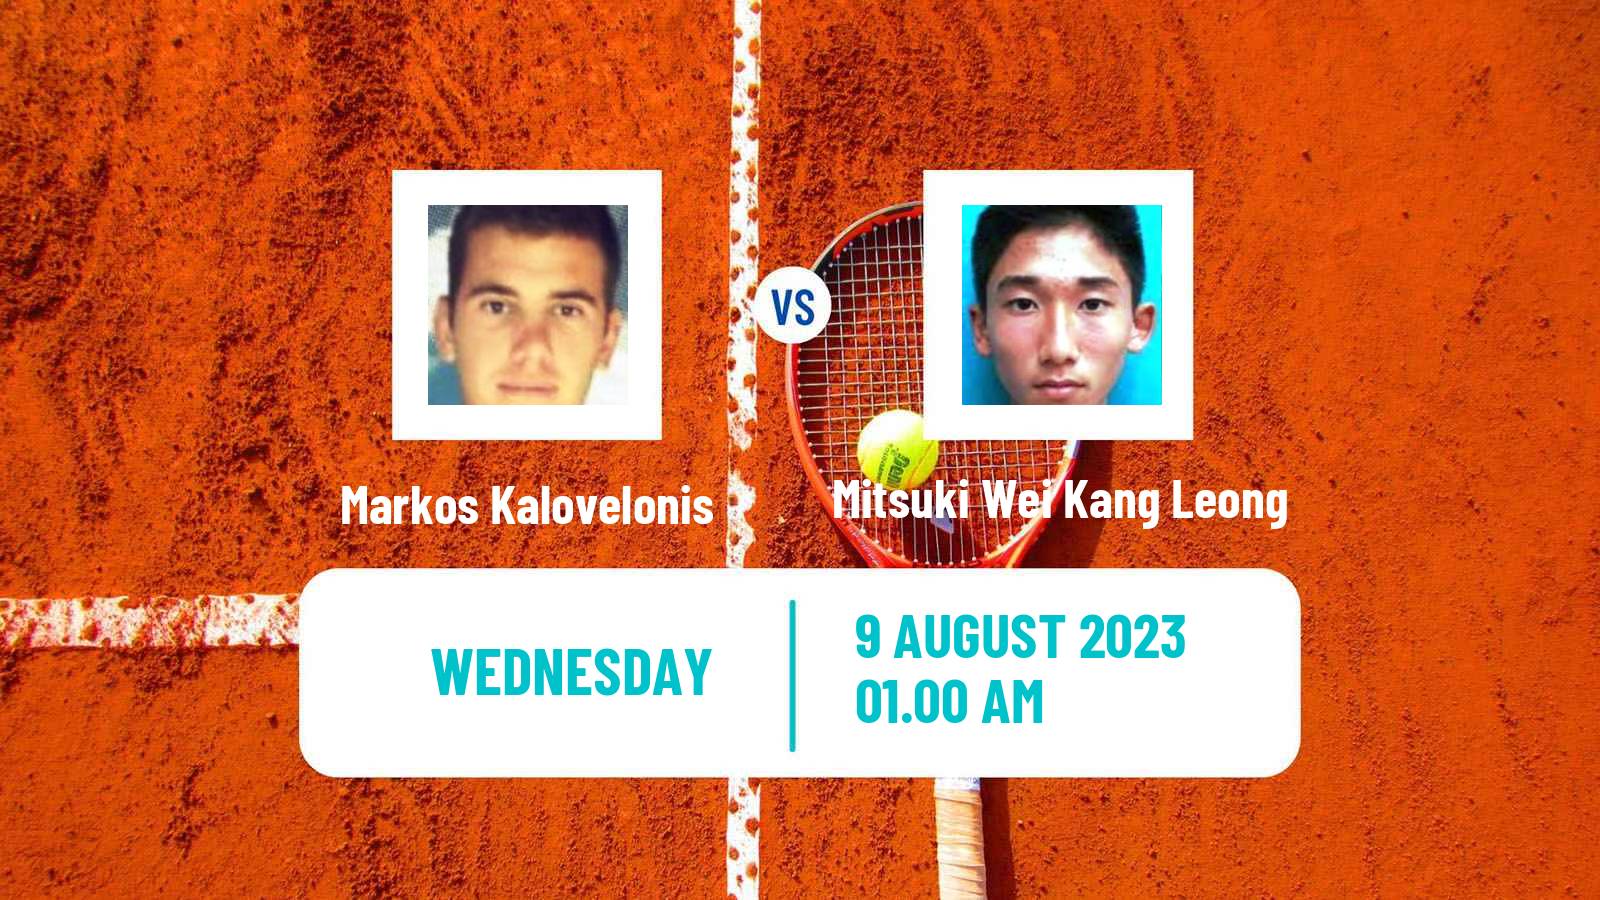 Tennis ITF M25 Jakarta 6 Men Markos Kalovelonis - Mitsuki Wei Kang Leong